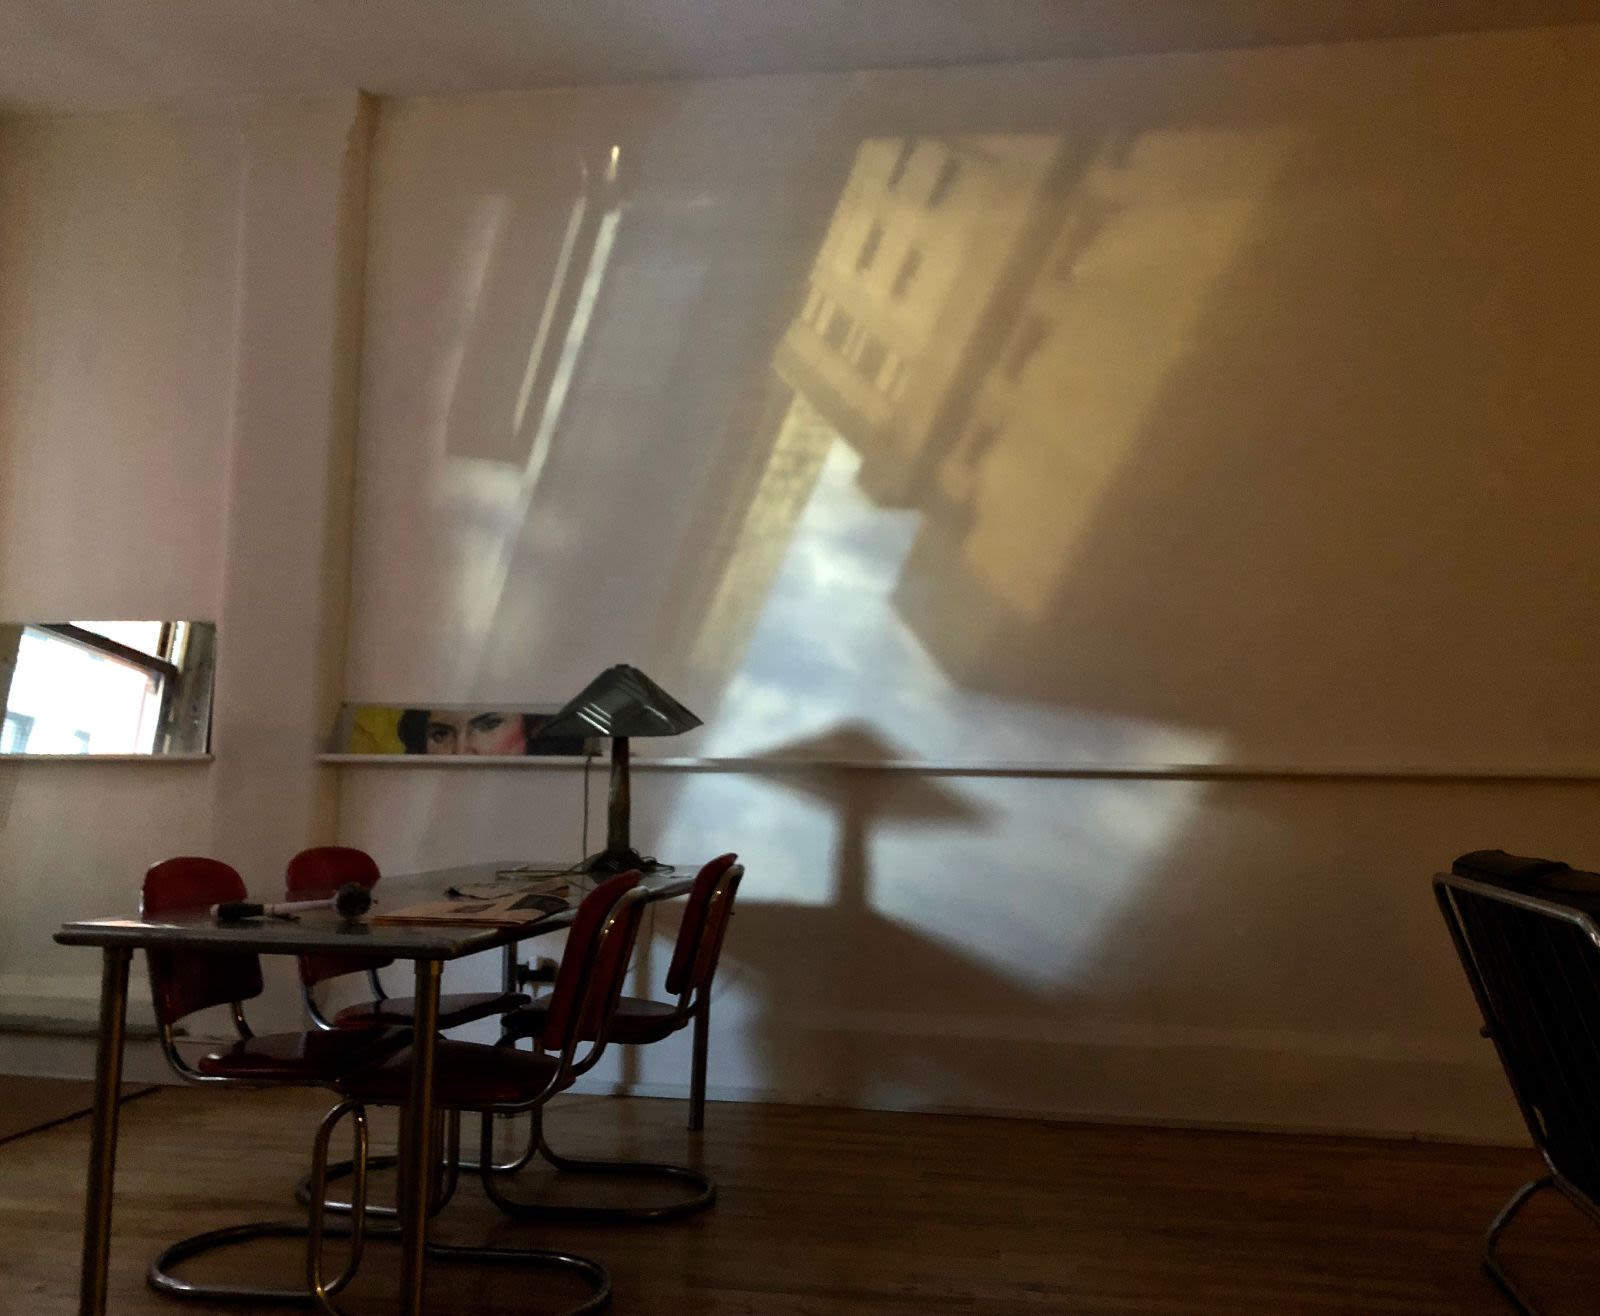 Camera obscura in Manhattan apartment